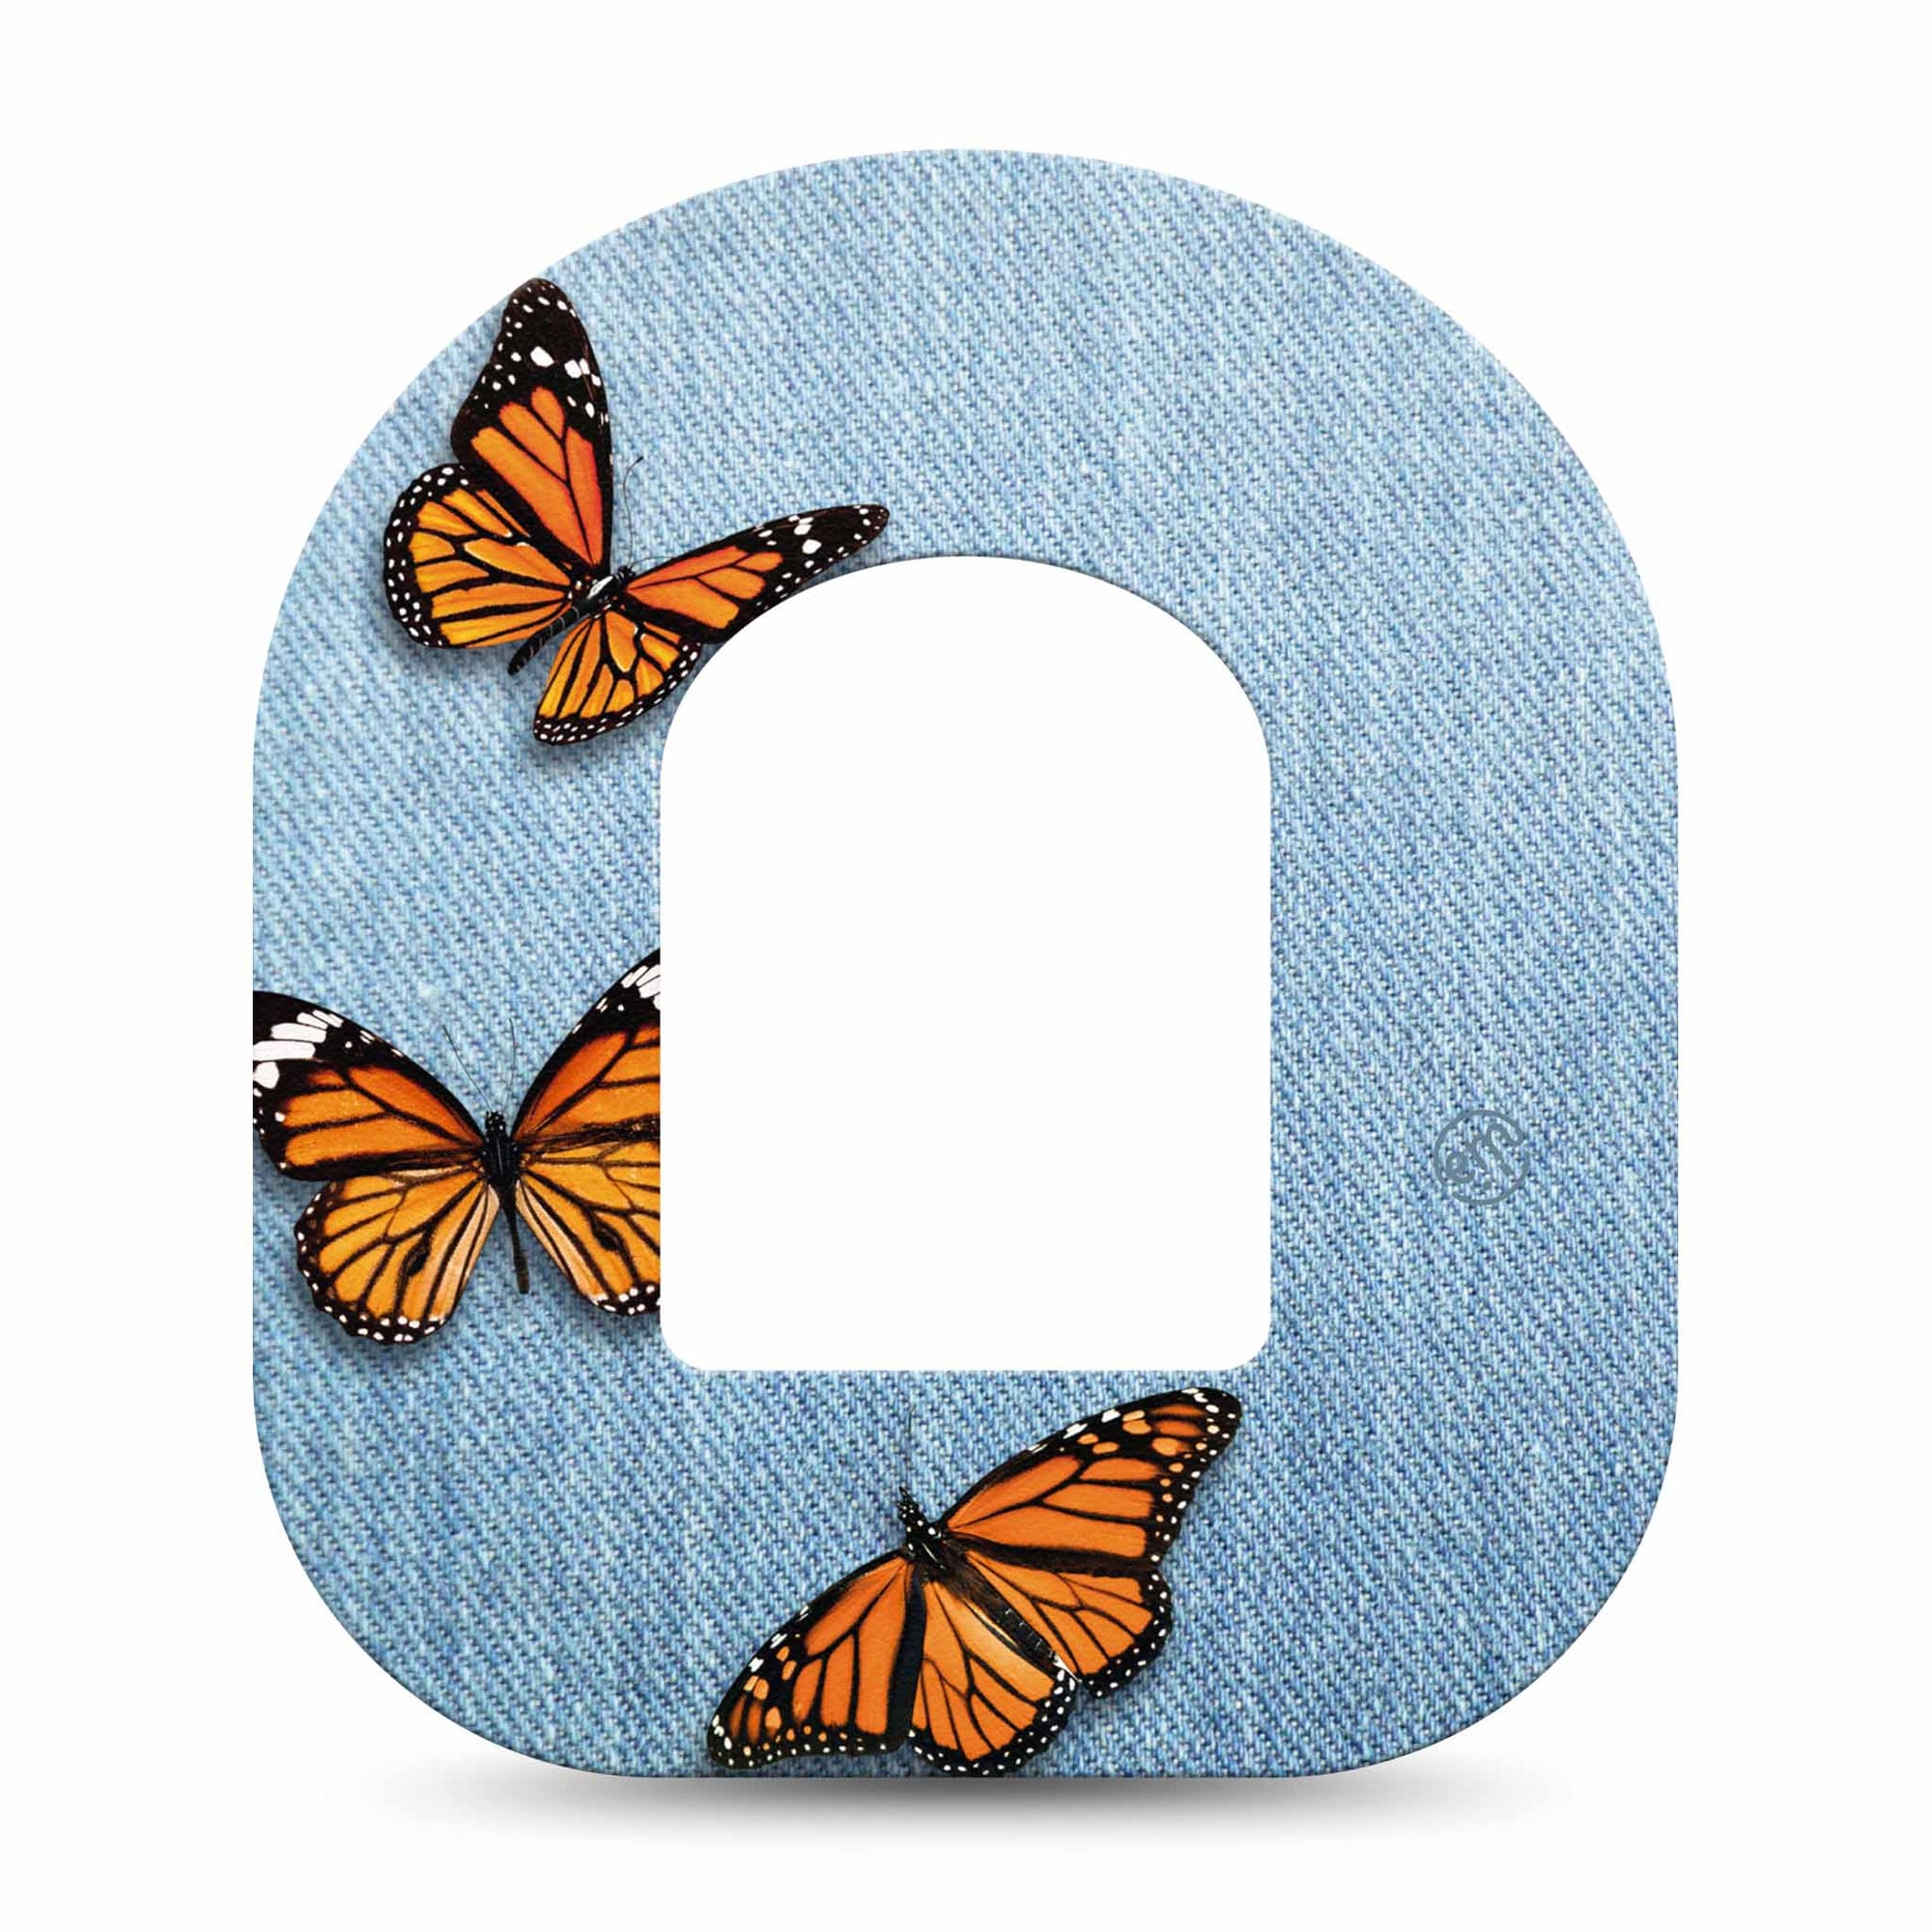 ExpressionMed Denim & Monarchs Omnipod Insulin Pump Patch butterflies for girls